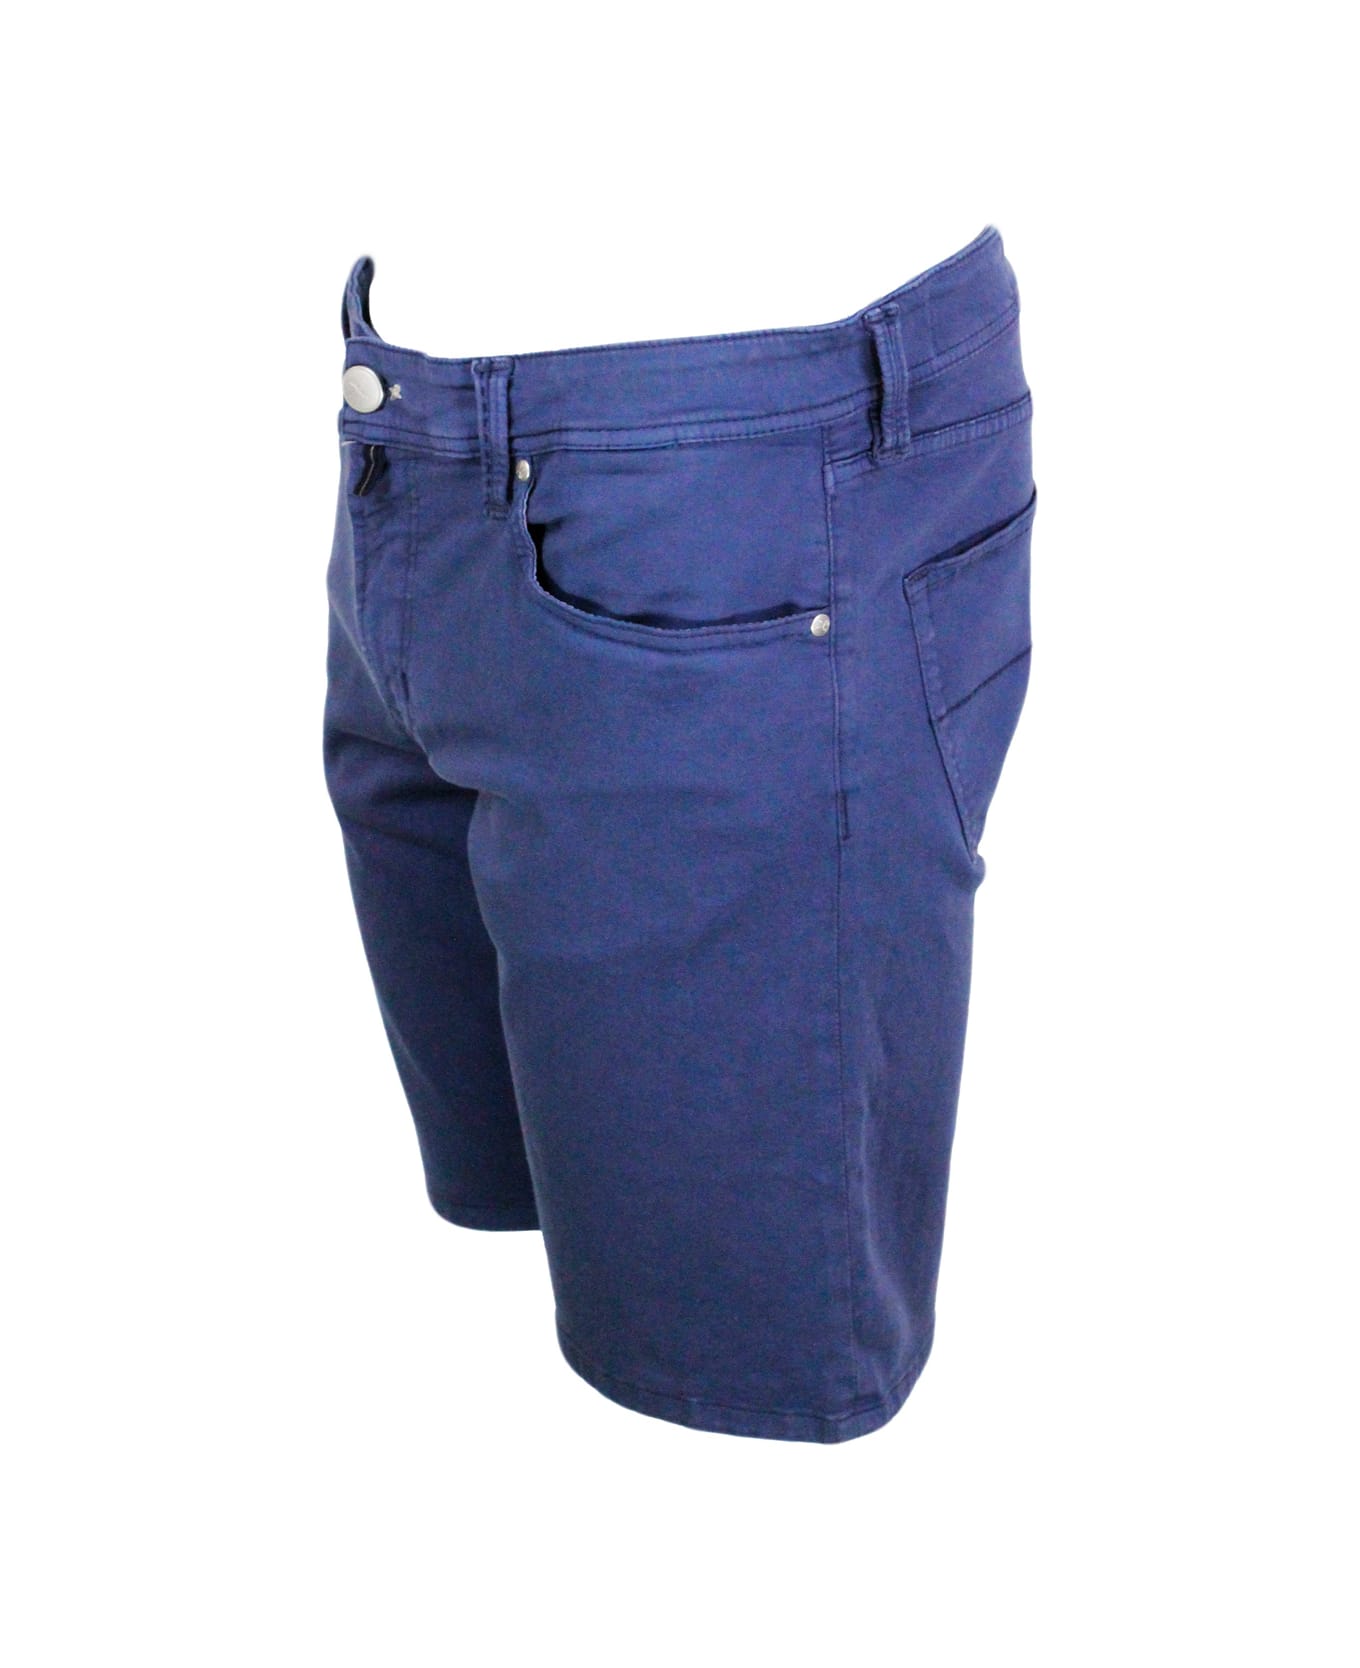 Sartoria Tramarossa Ascanio Slim Bermuda Shorts In Super Stretch Cotton Gabardine With 5 Pockets And Tailored Stitching - Blu light